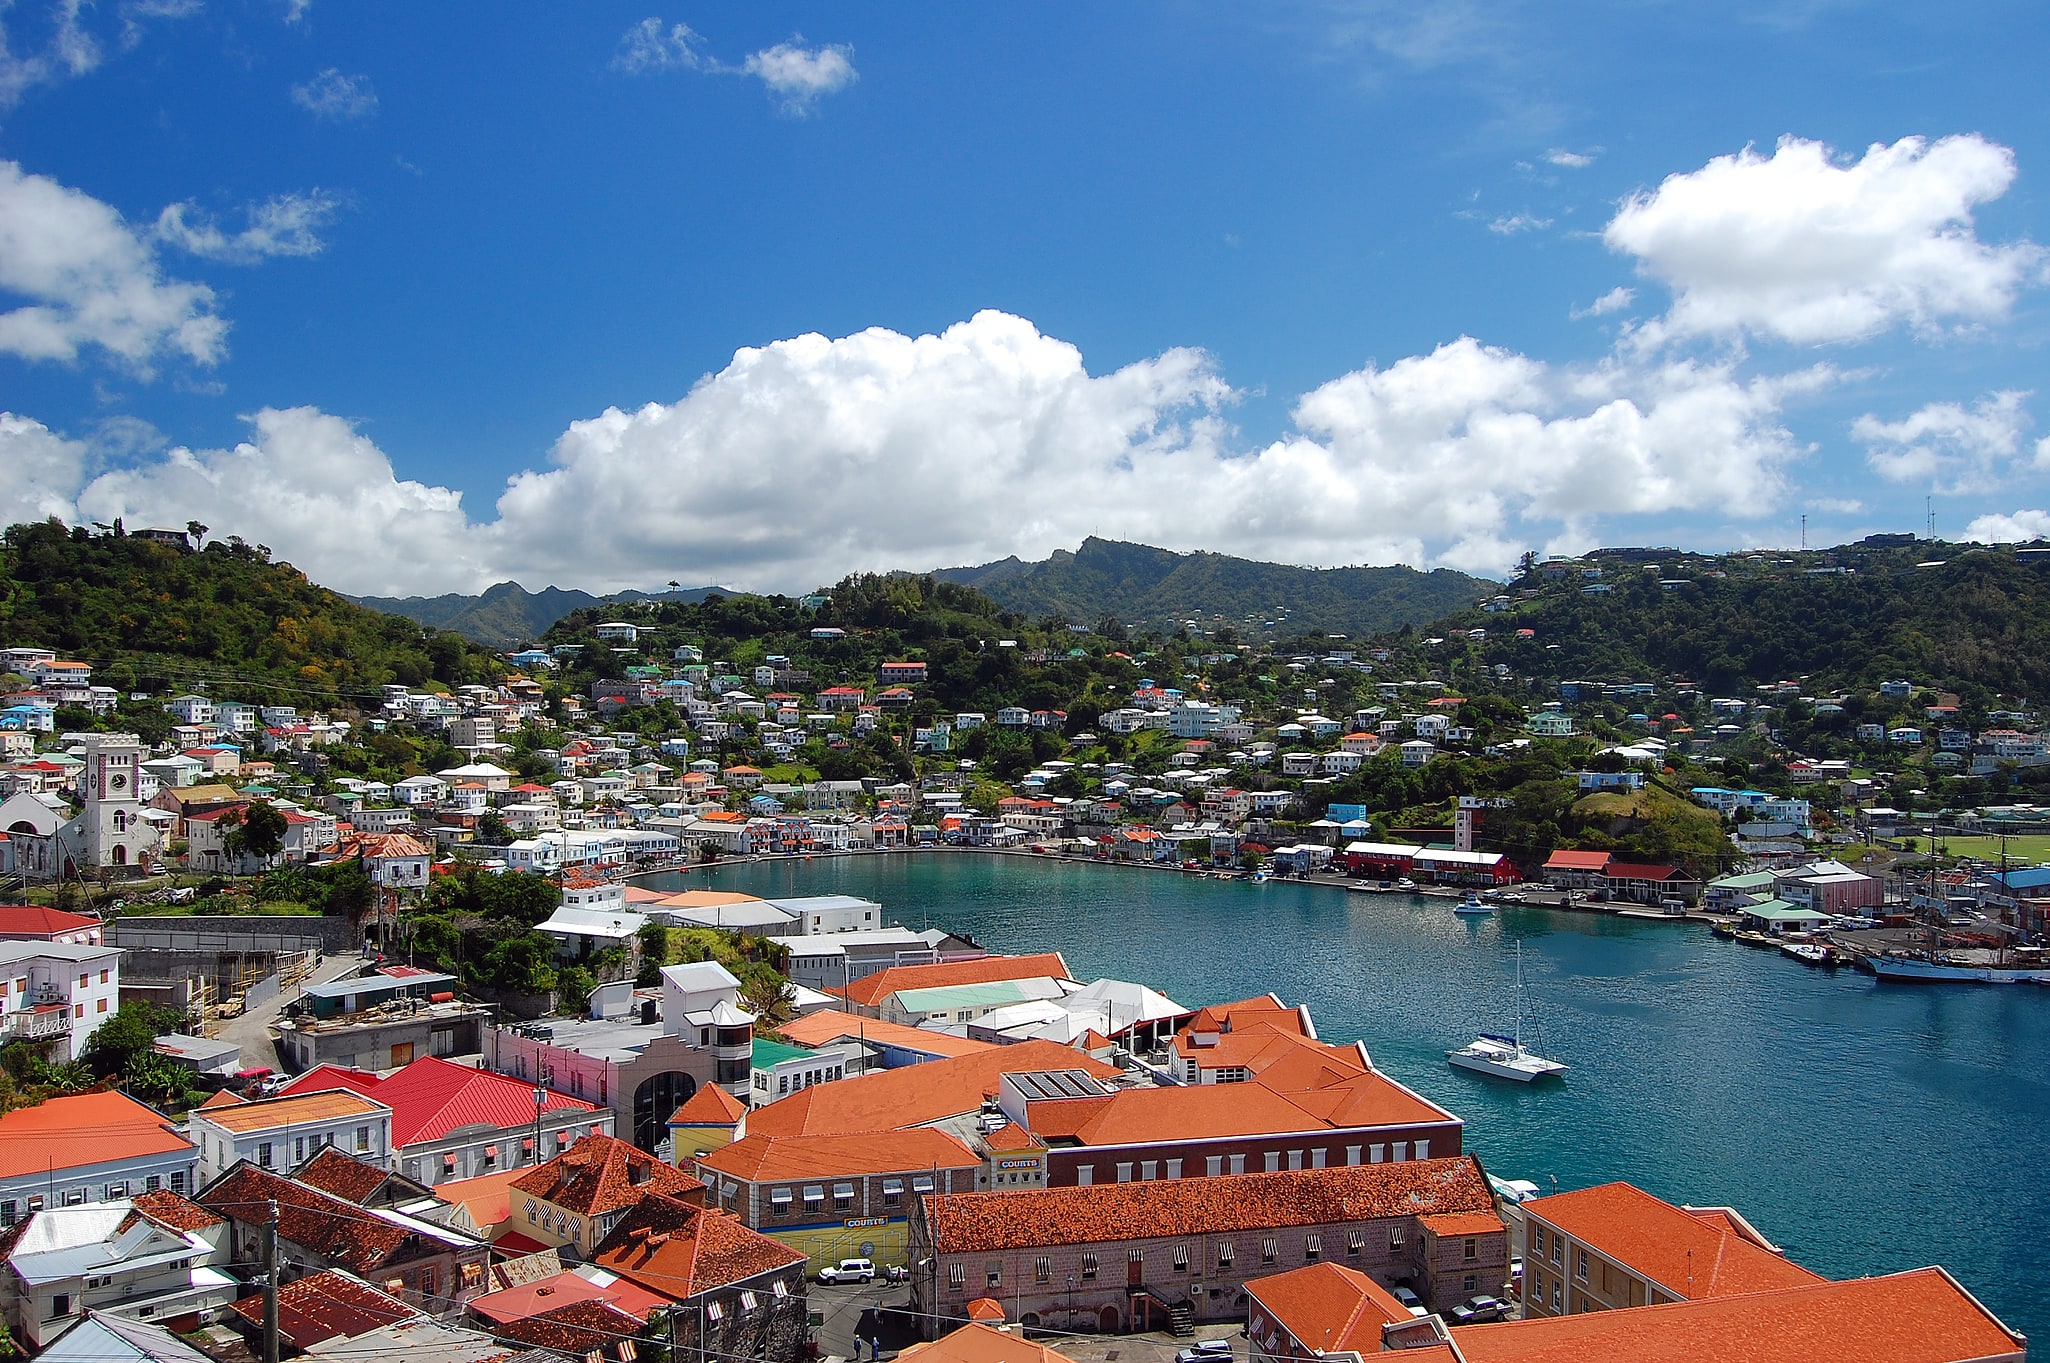 St. George’s, Grenada